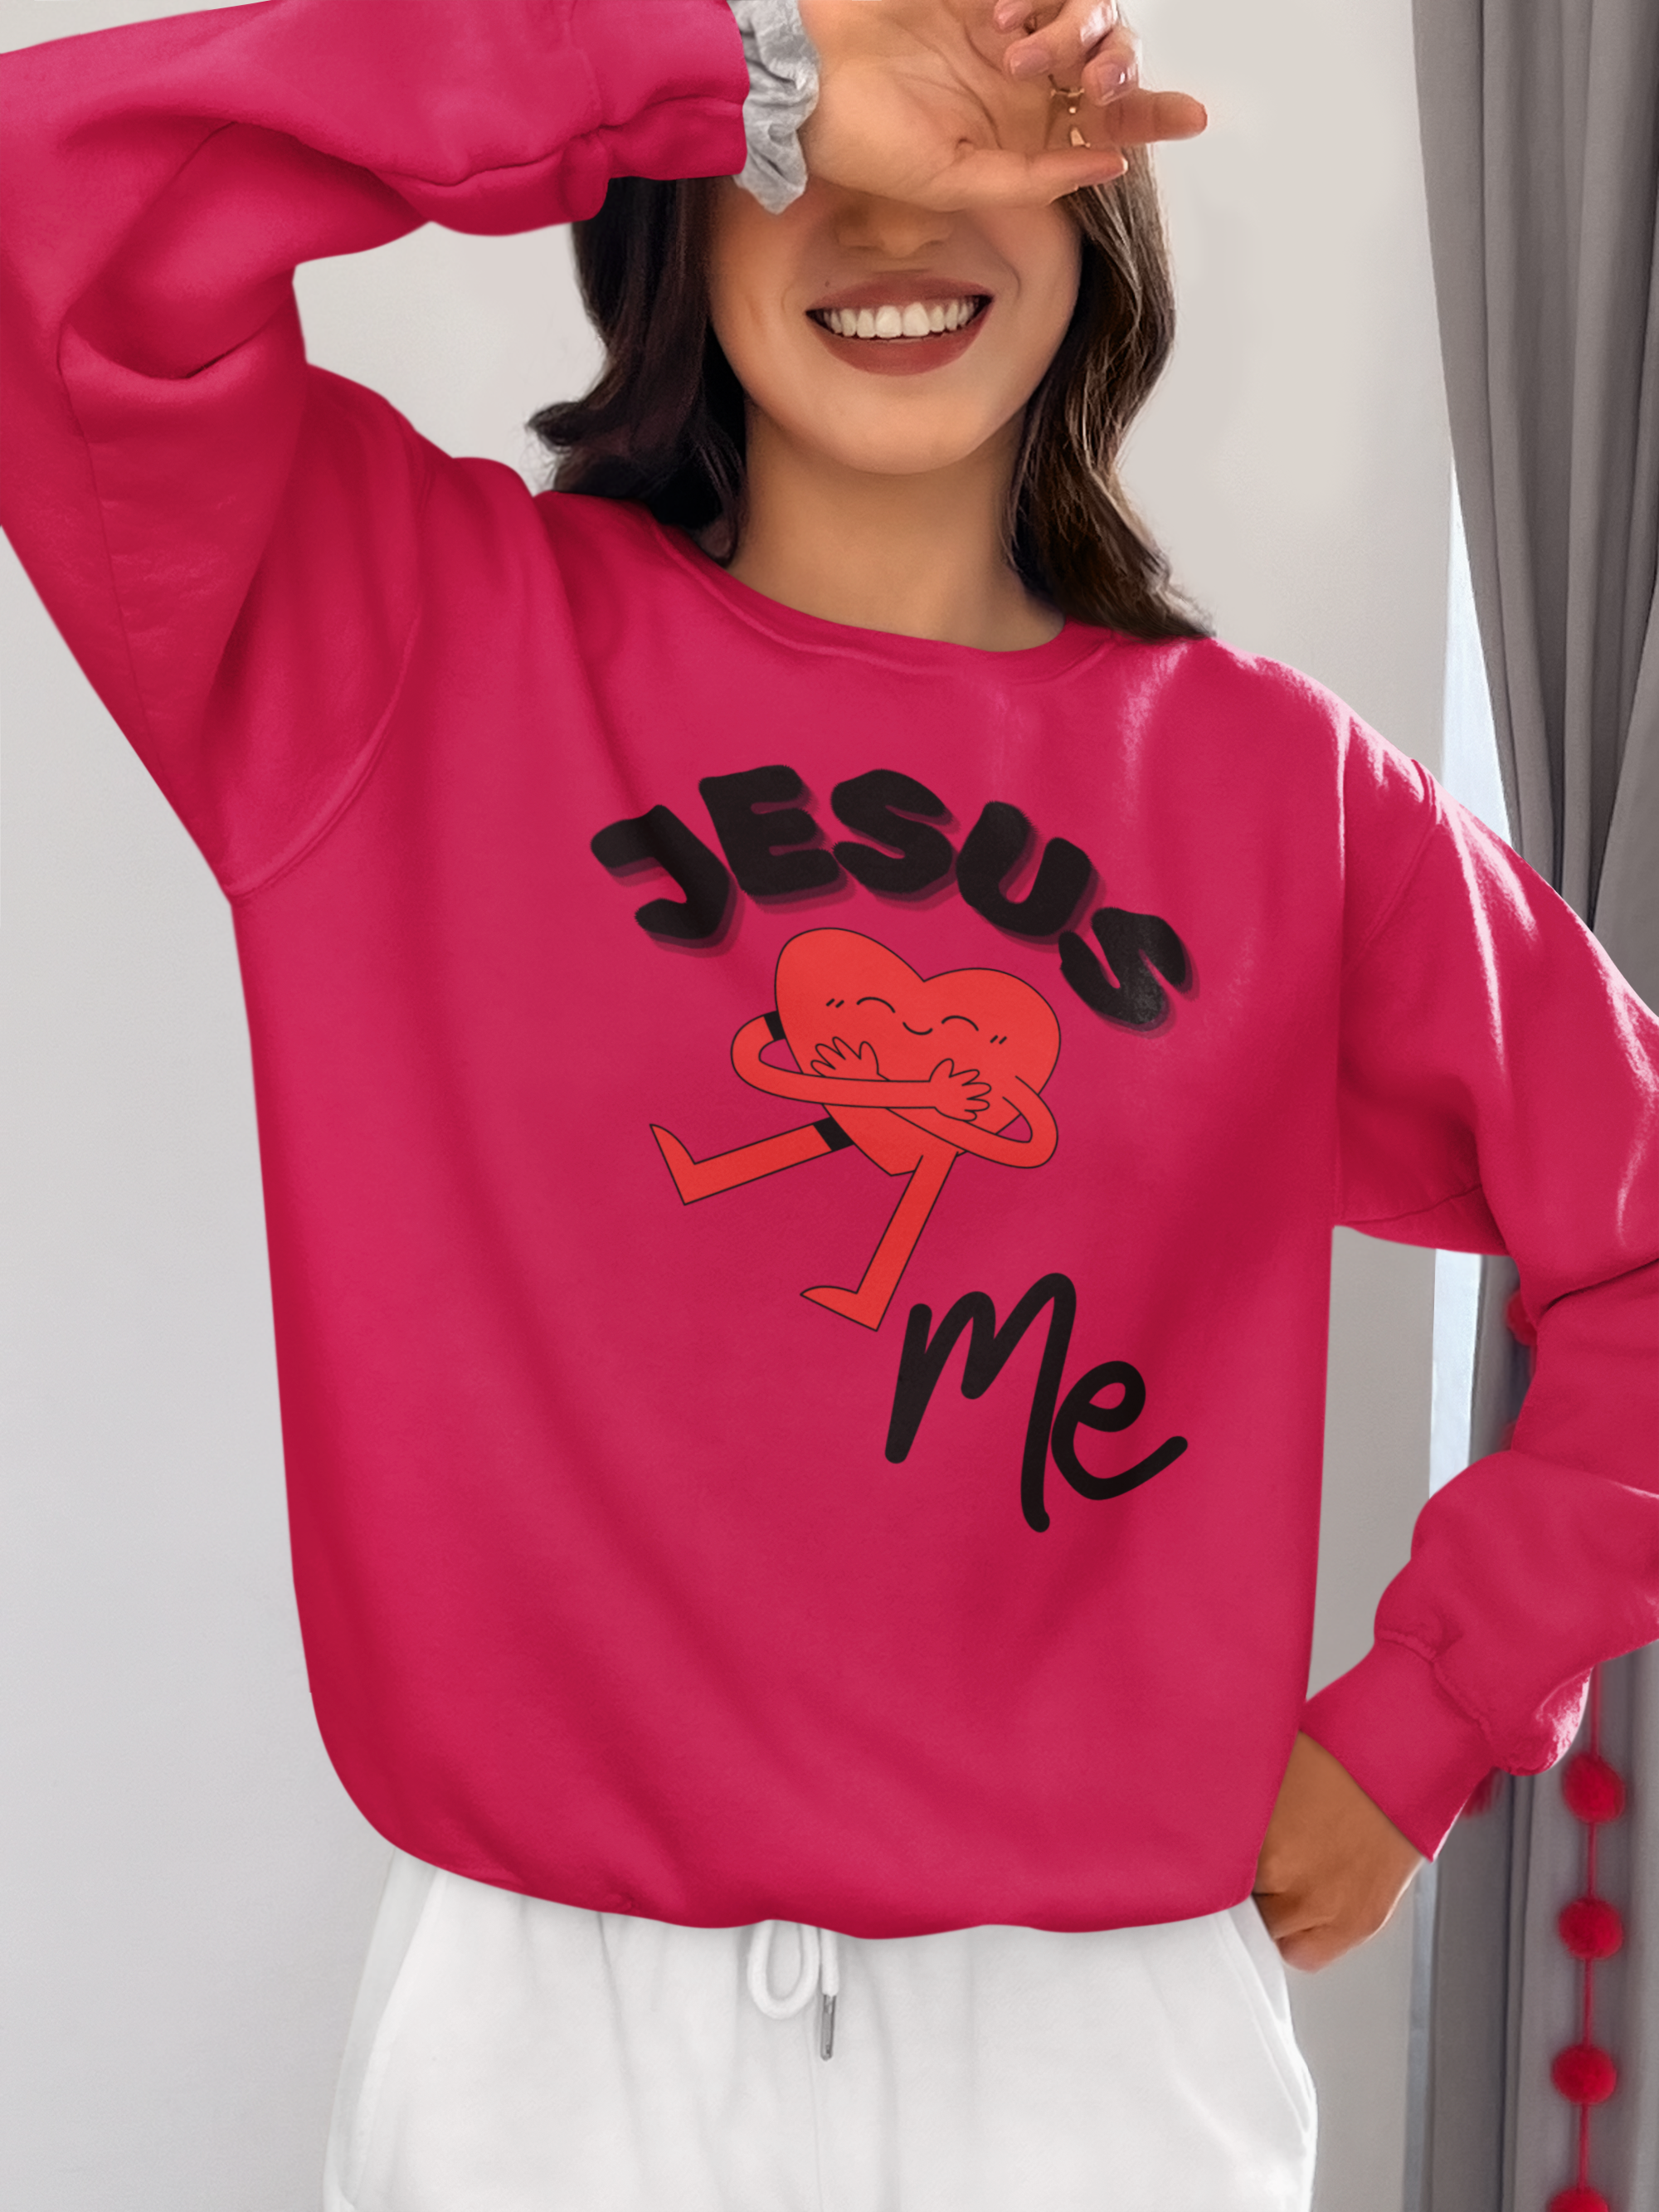 Jesus Loves Me Crewneck Pullover Sweatshirt